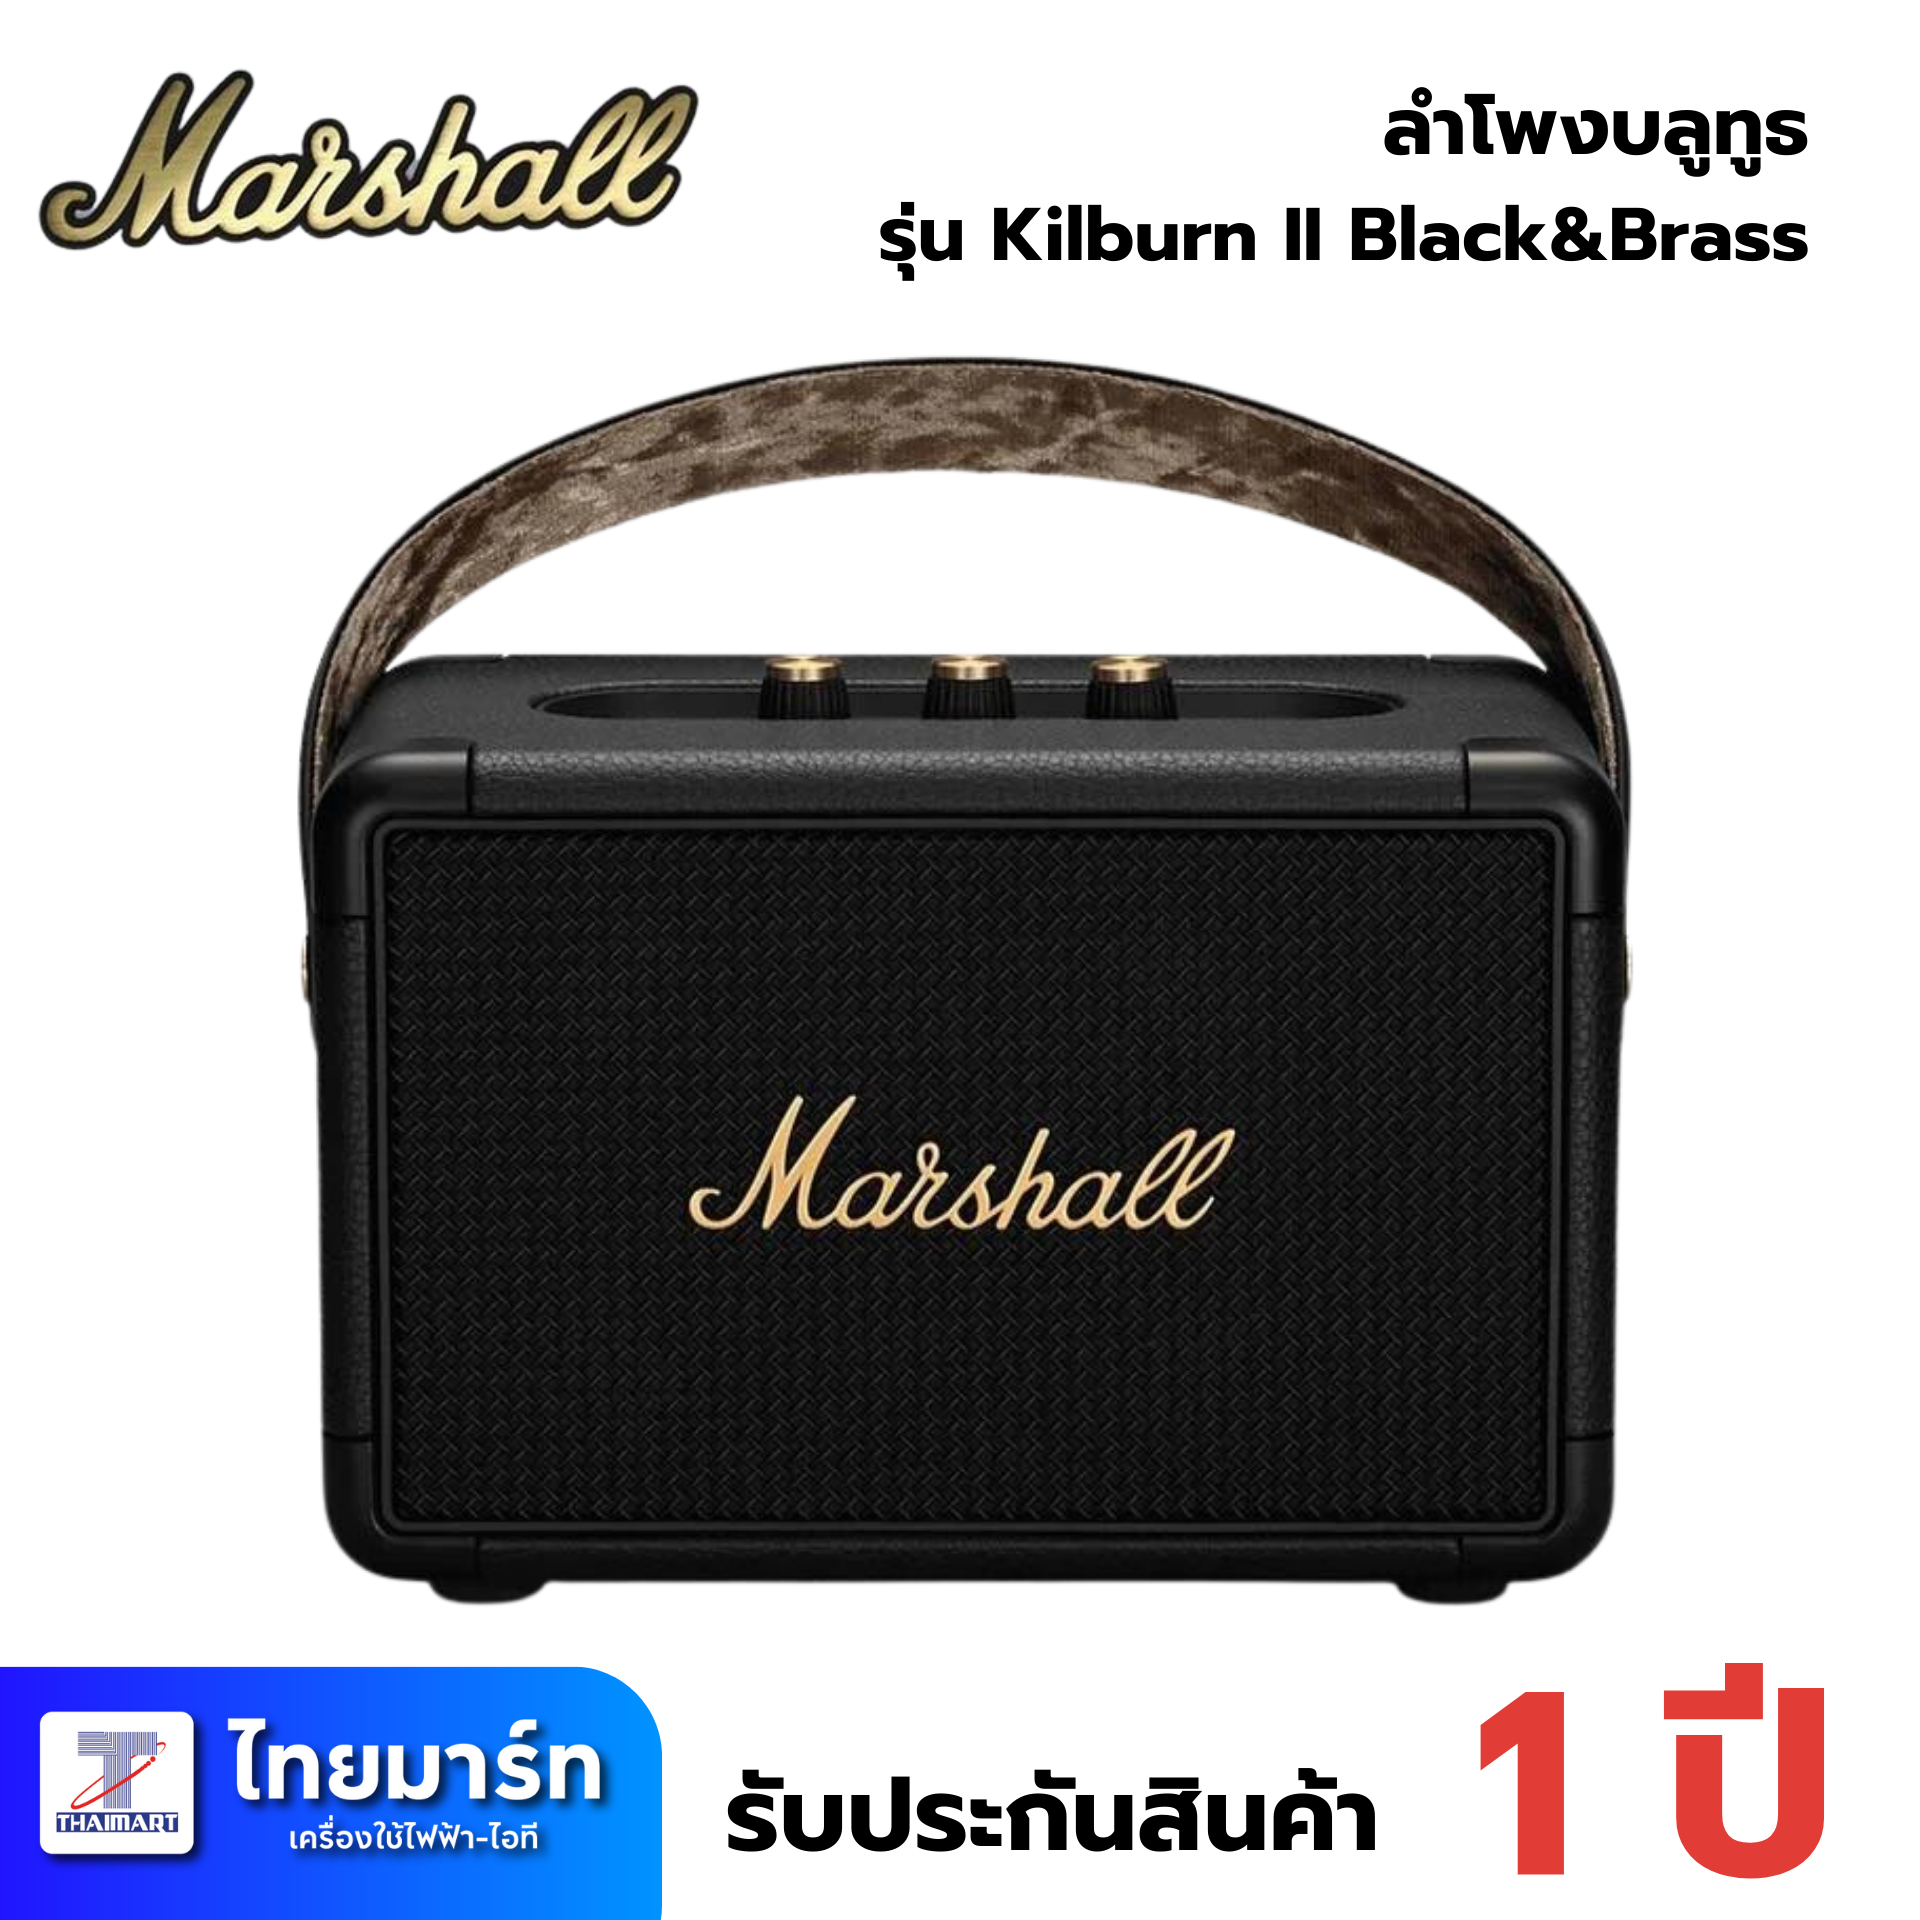 Marshall ลำโพงบลูทูธ Marshall Bluetooth Speaker Kilburn II Black&Brass